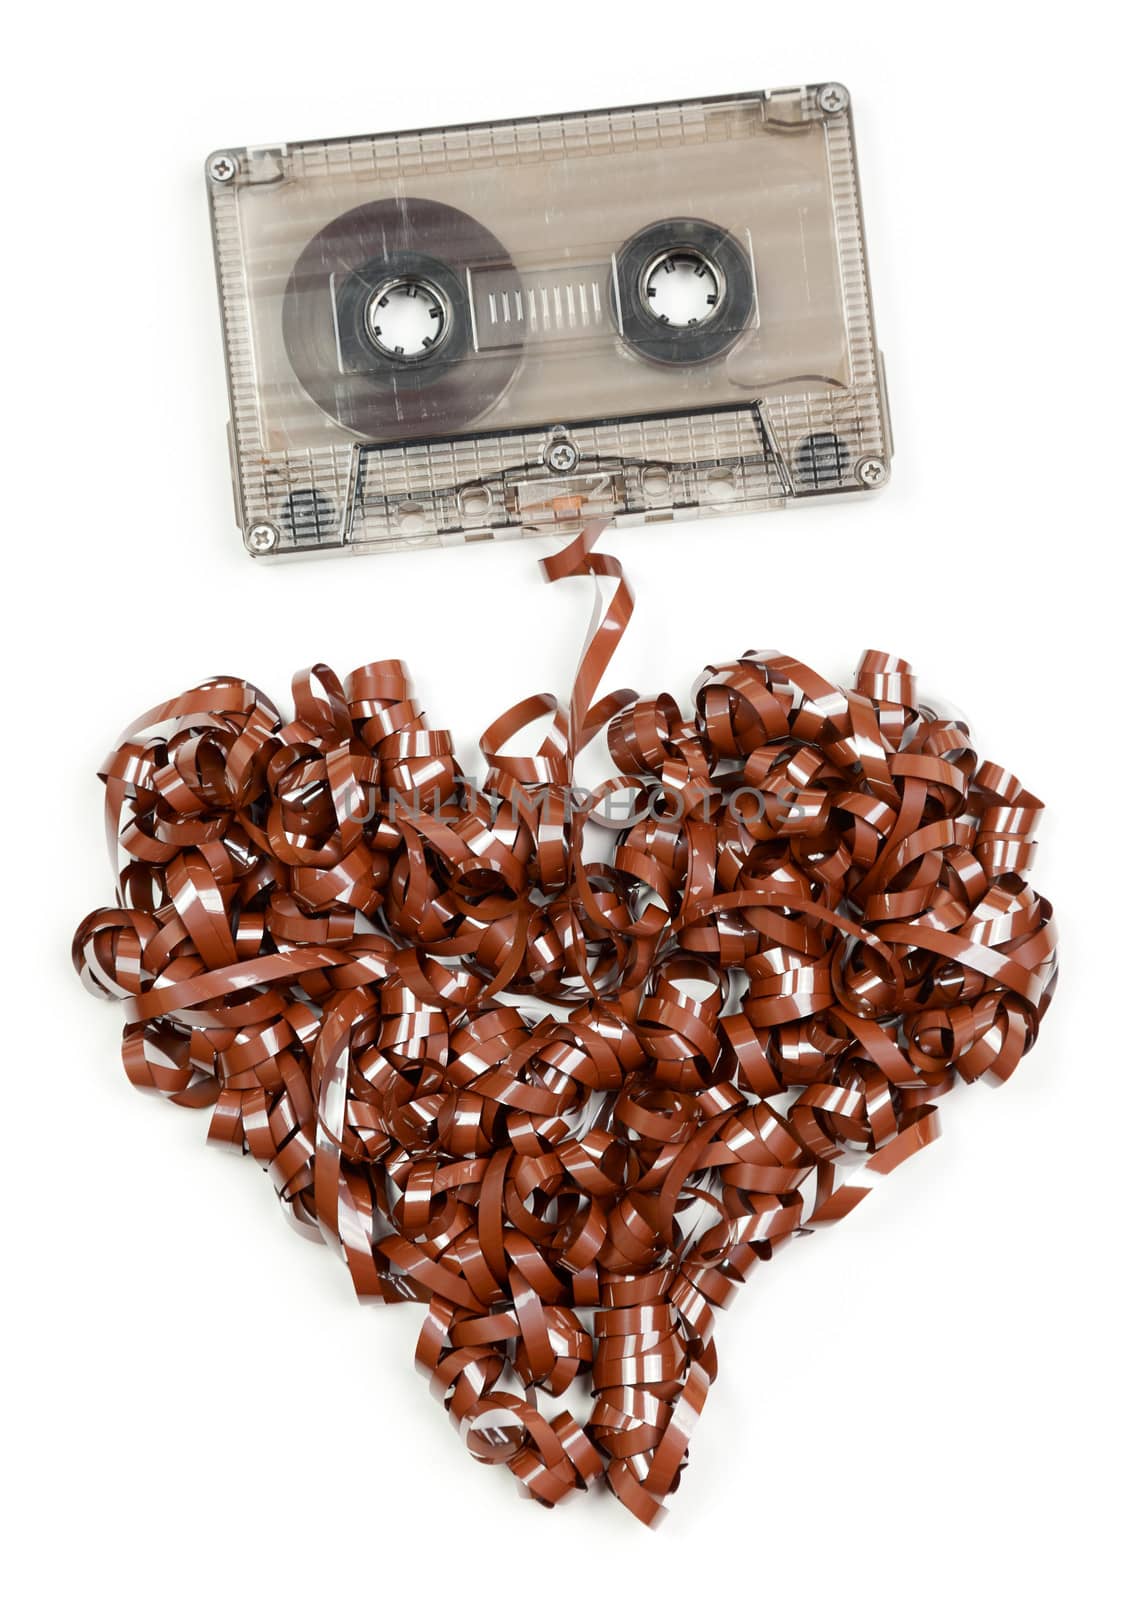 Heart shaped audio tape by naumoid